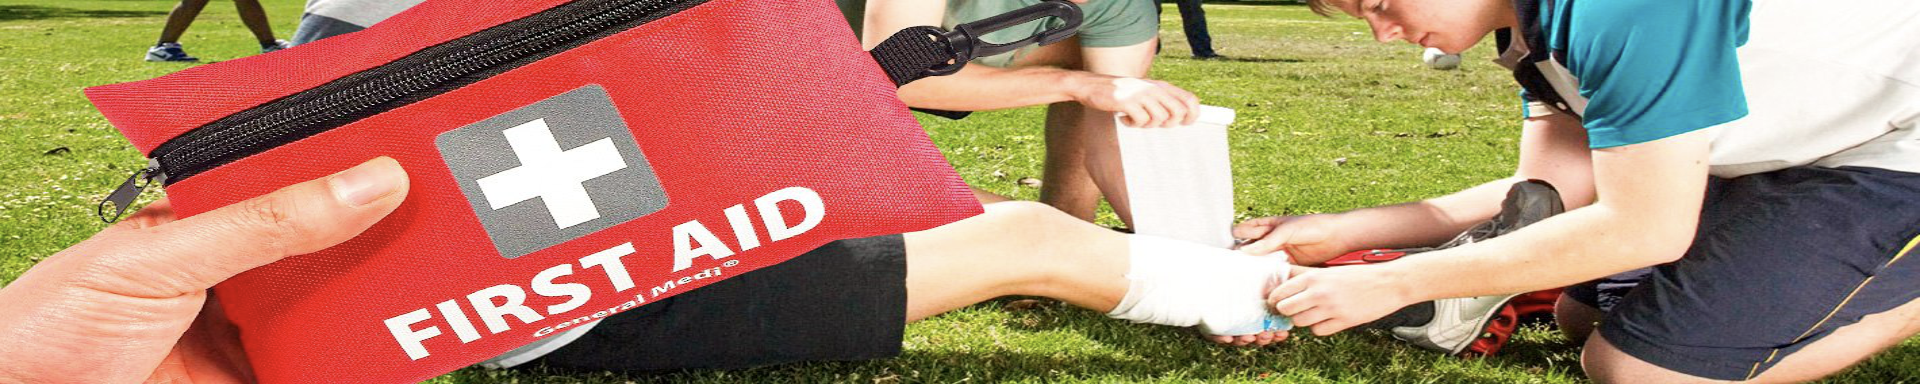 Sports First Aid Kits | MunroKennels.com | Munro Industries mk-1009042309